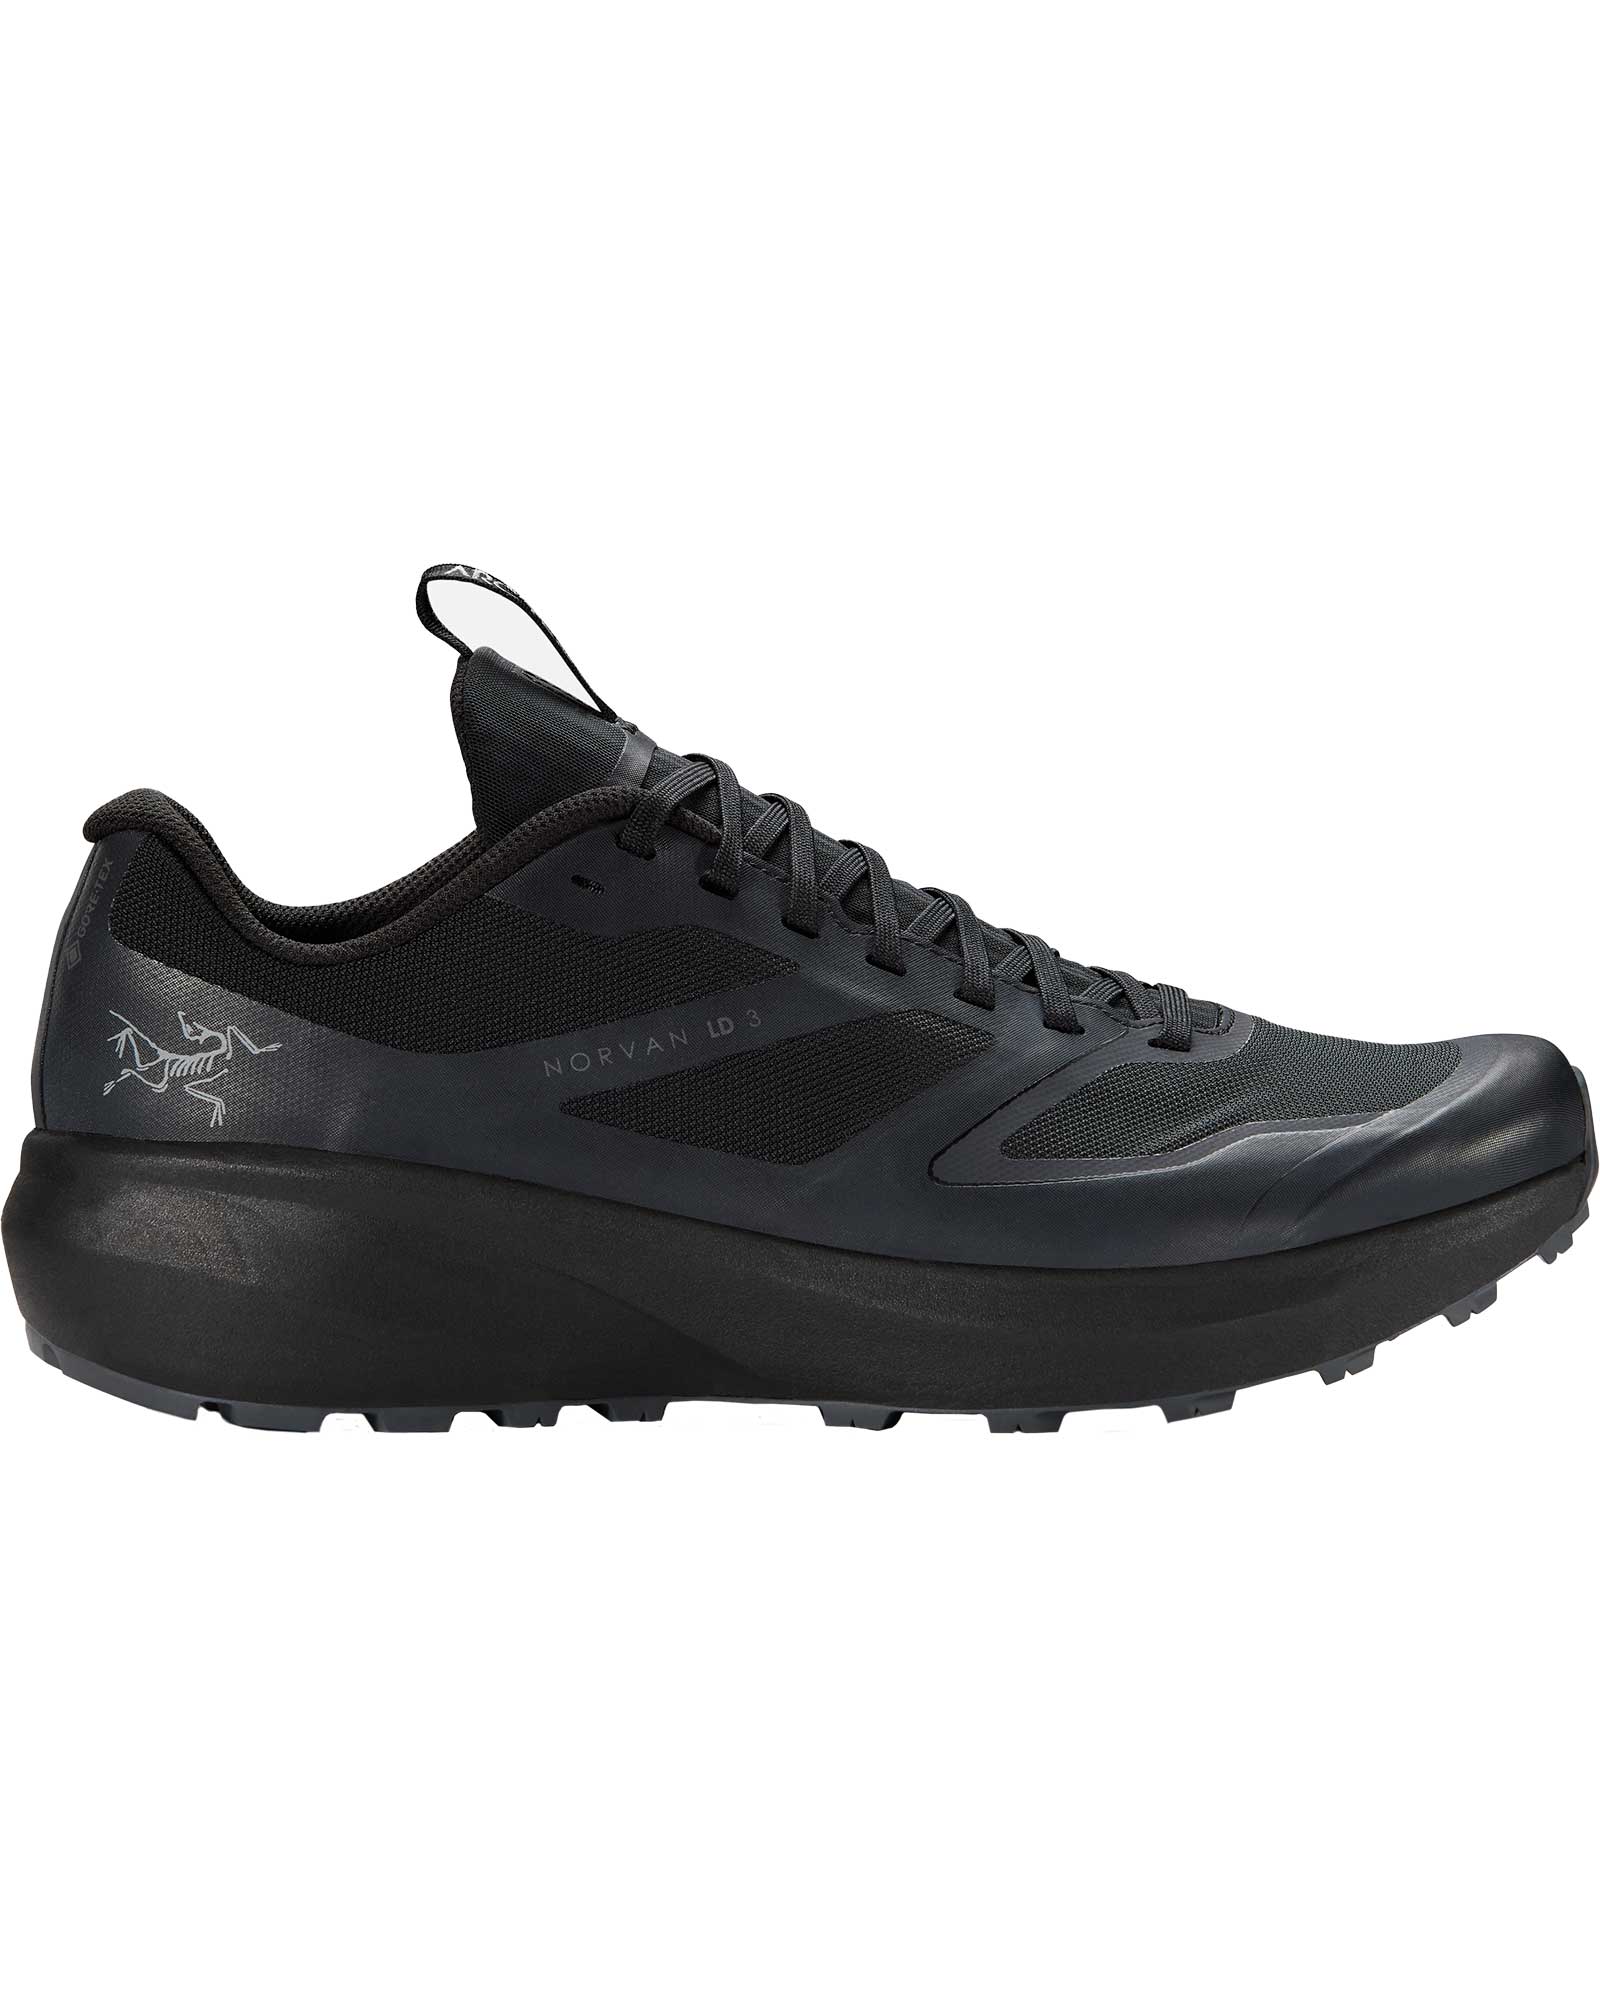 Arc’teryx Norvan LD 3 GORE TEX Men’s Shoes - Black/Black UK 10